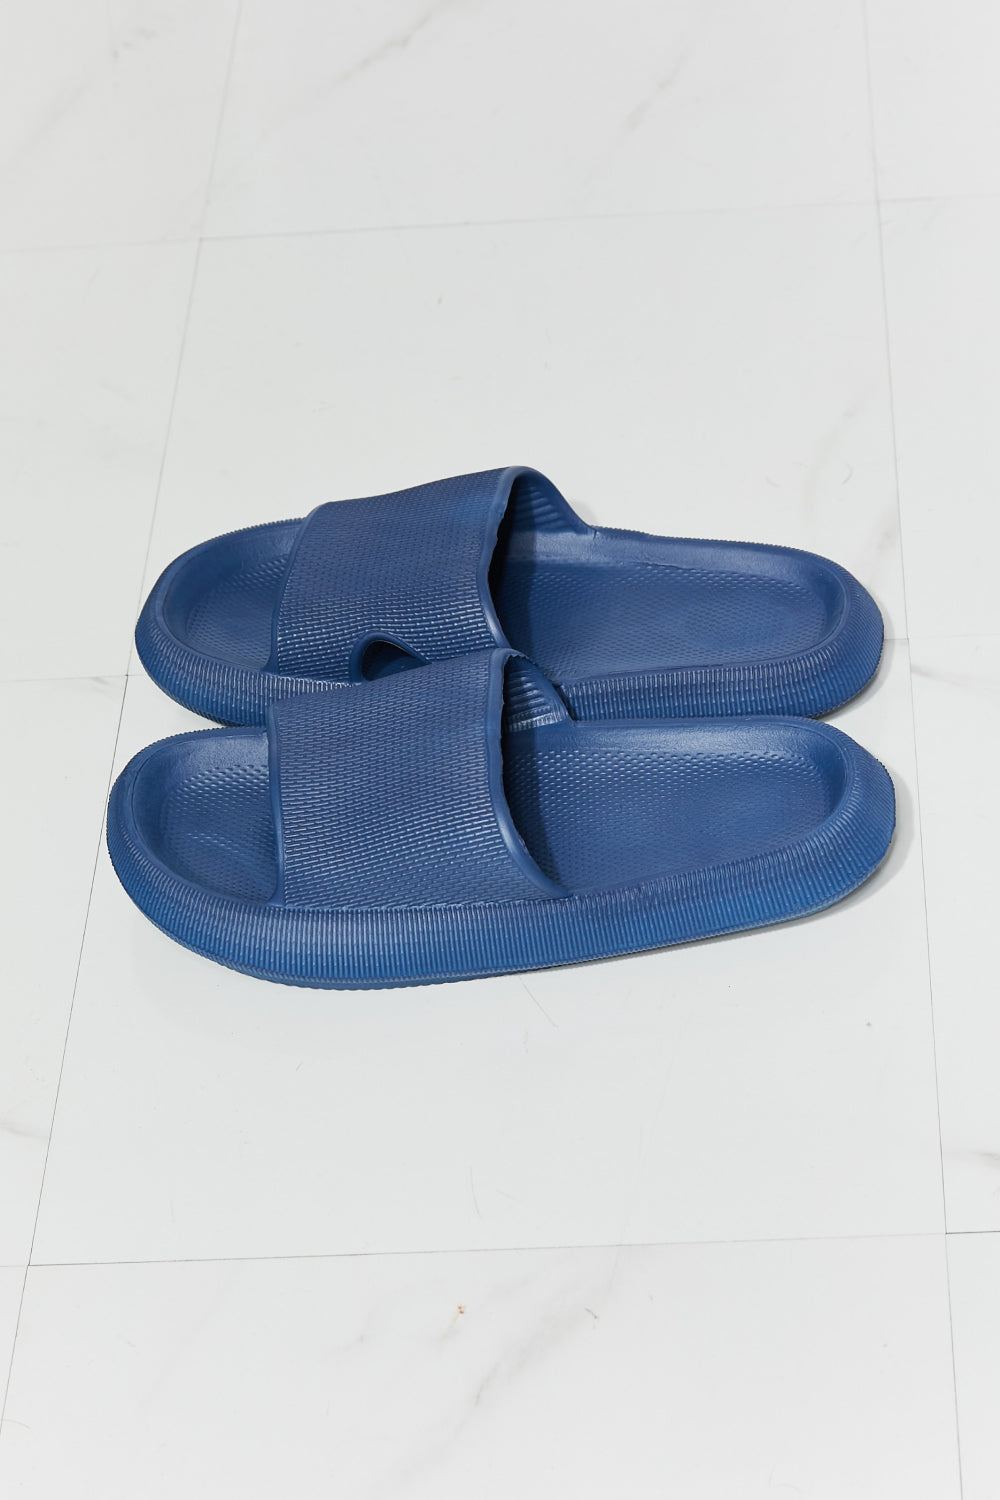 Nacy Blue Comfy Open Toe Slides